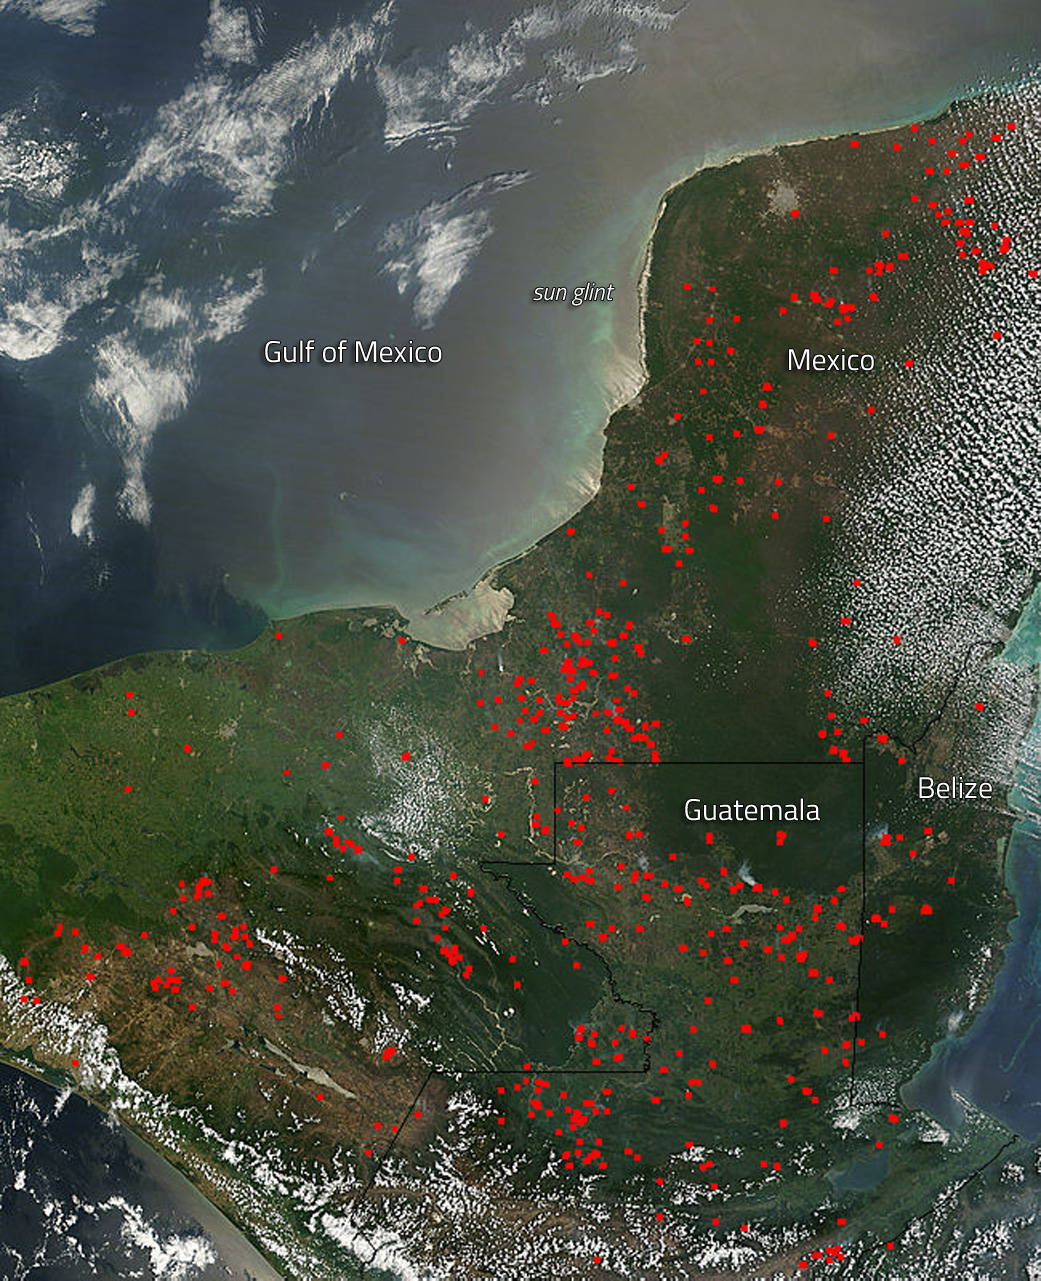 Fires in the Yucatan Peninsula April 2015